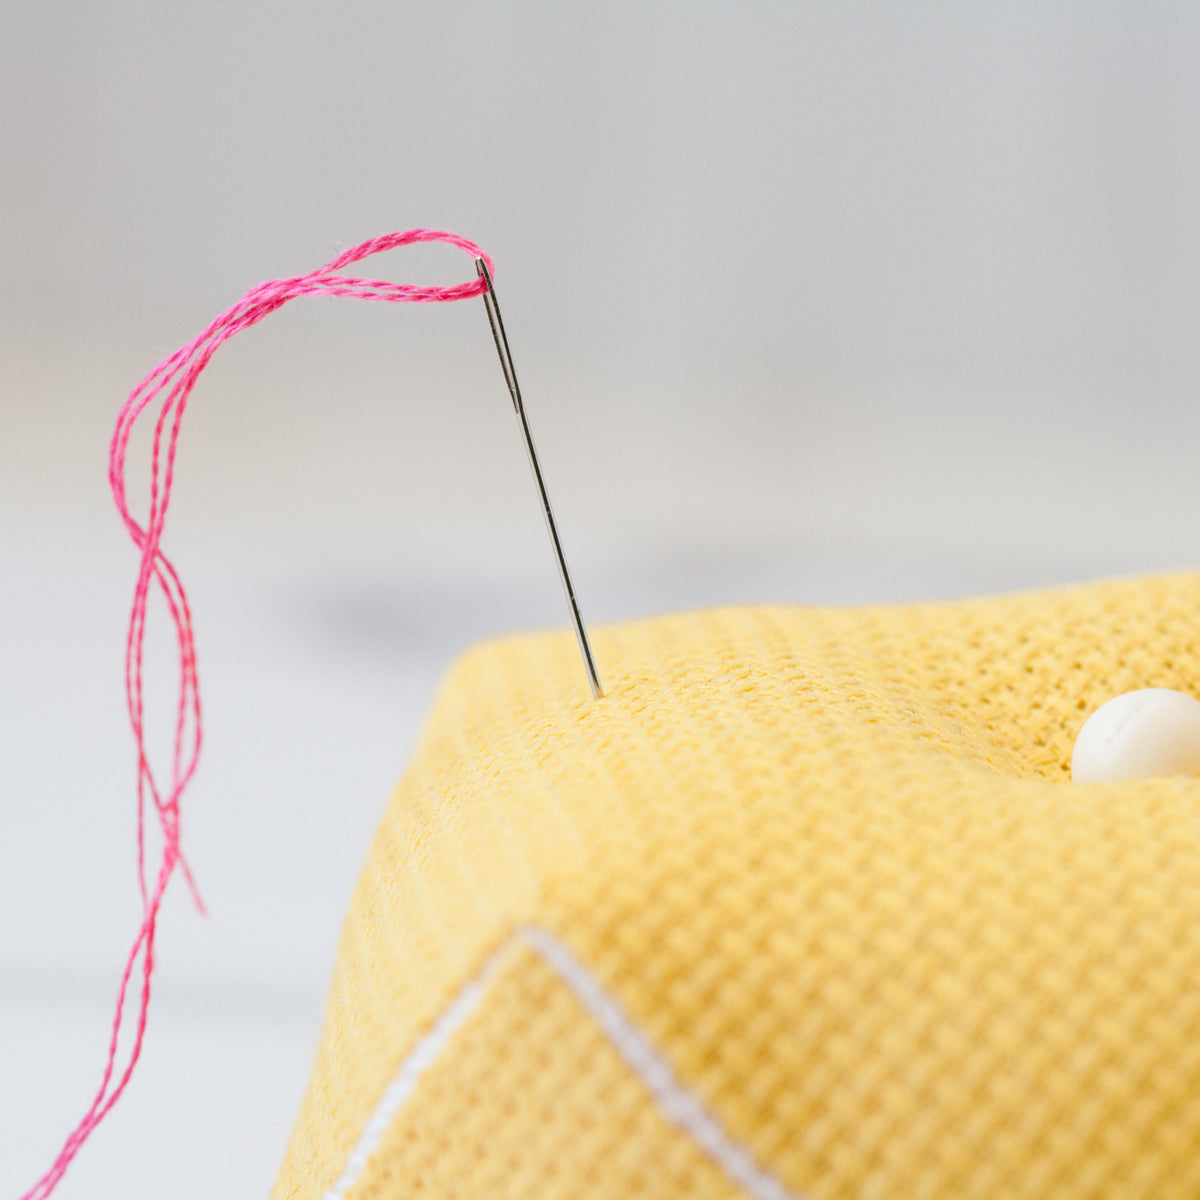 Knitting needle sizes old and new